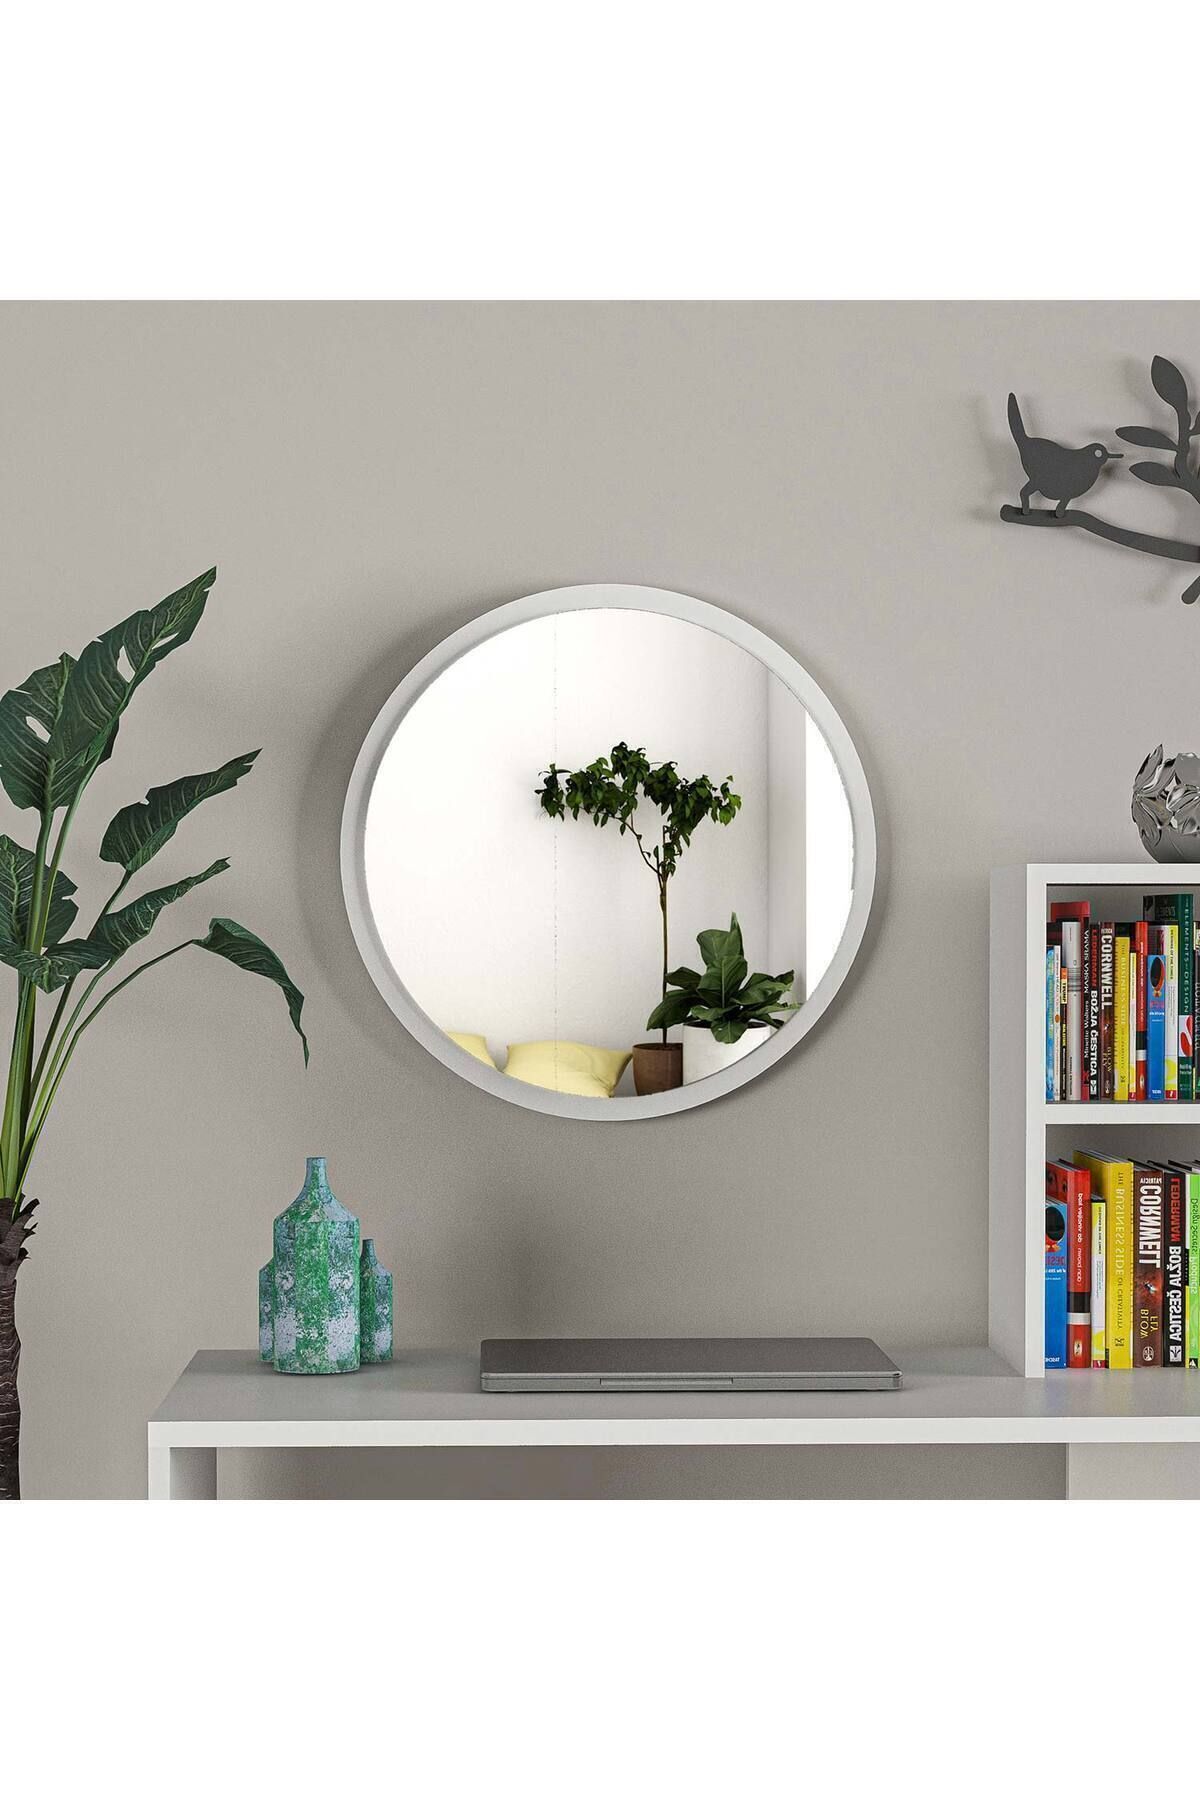 Bofigo 45 Cm Rio Banyo Aynası Dekoratif Lavabo Aynası Yuvarlak Ayna Beyaz